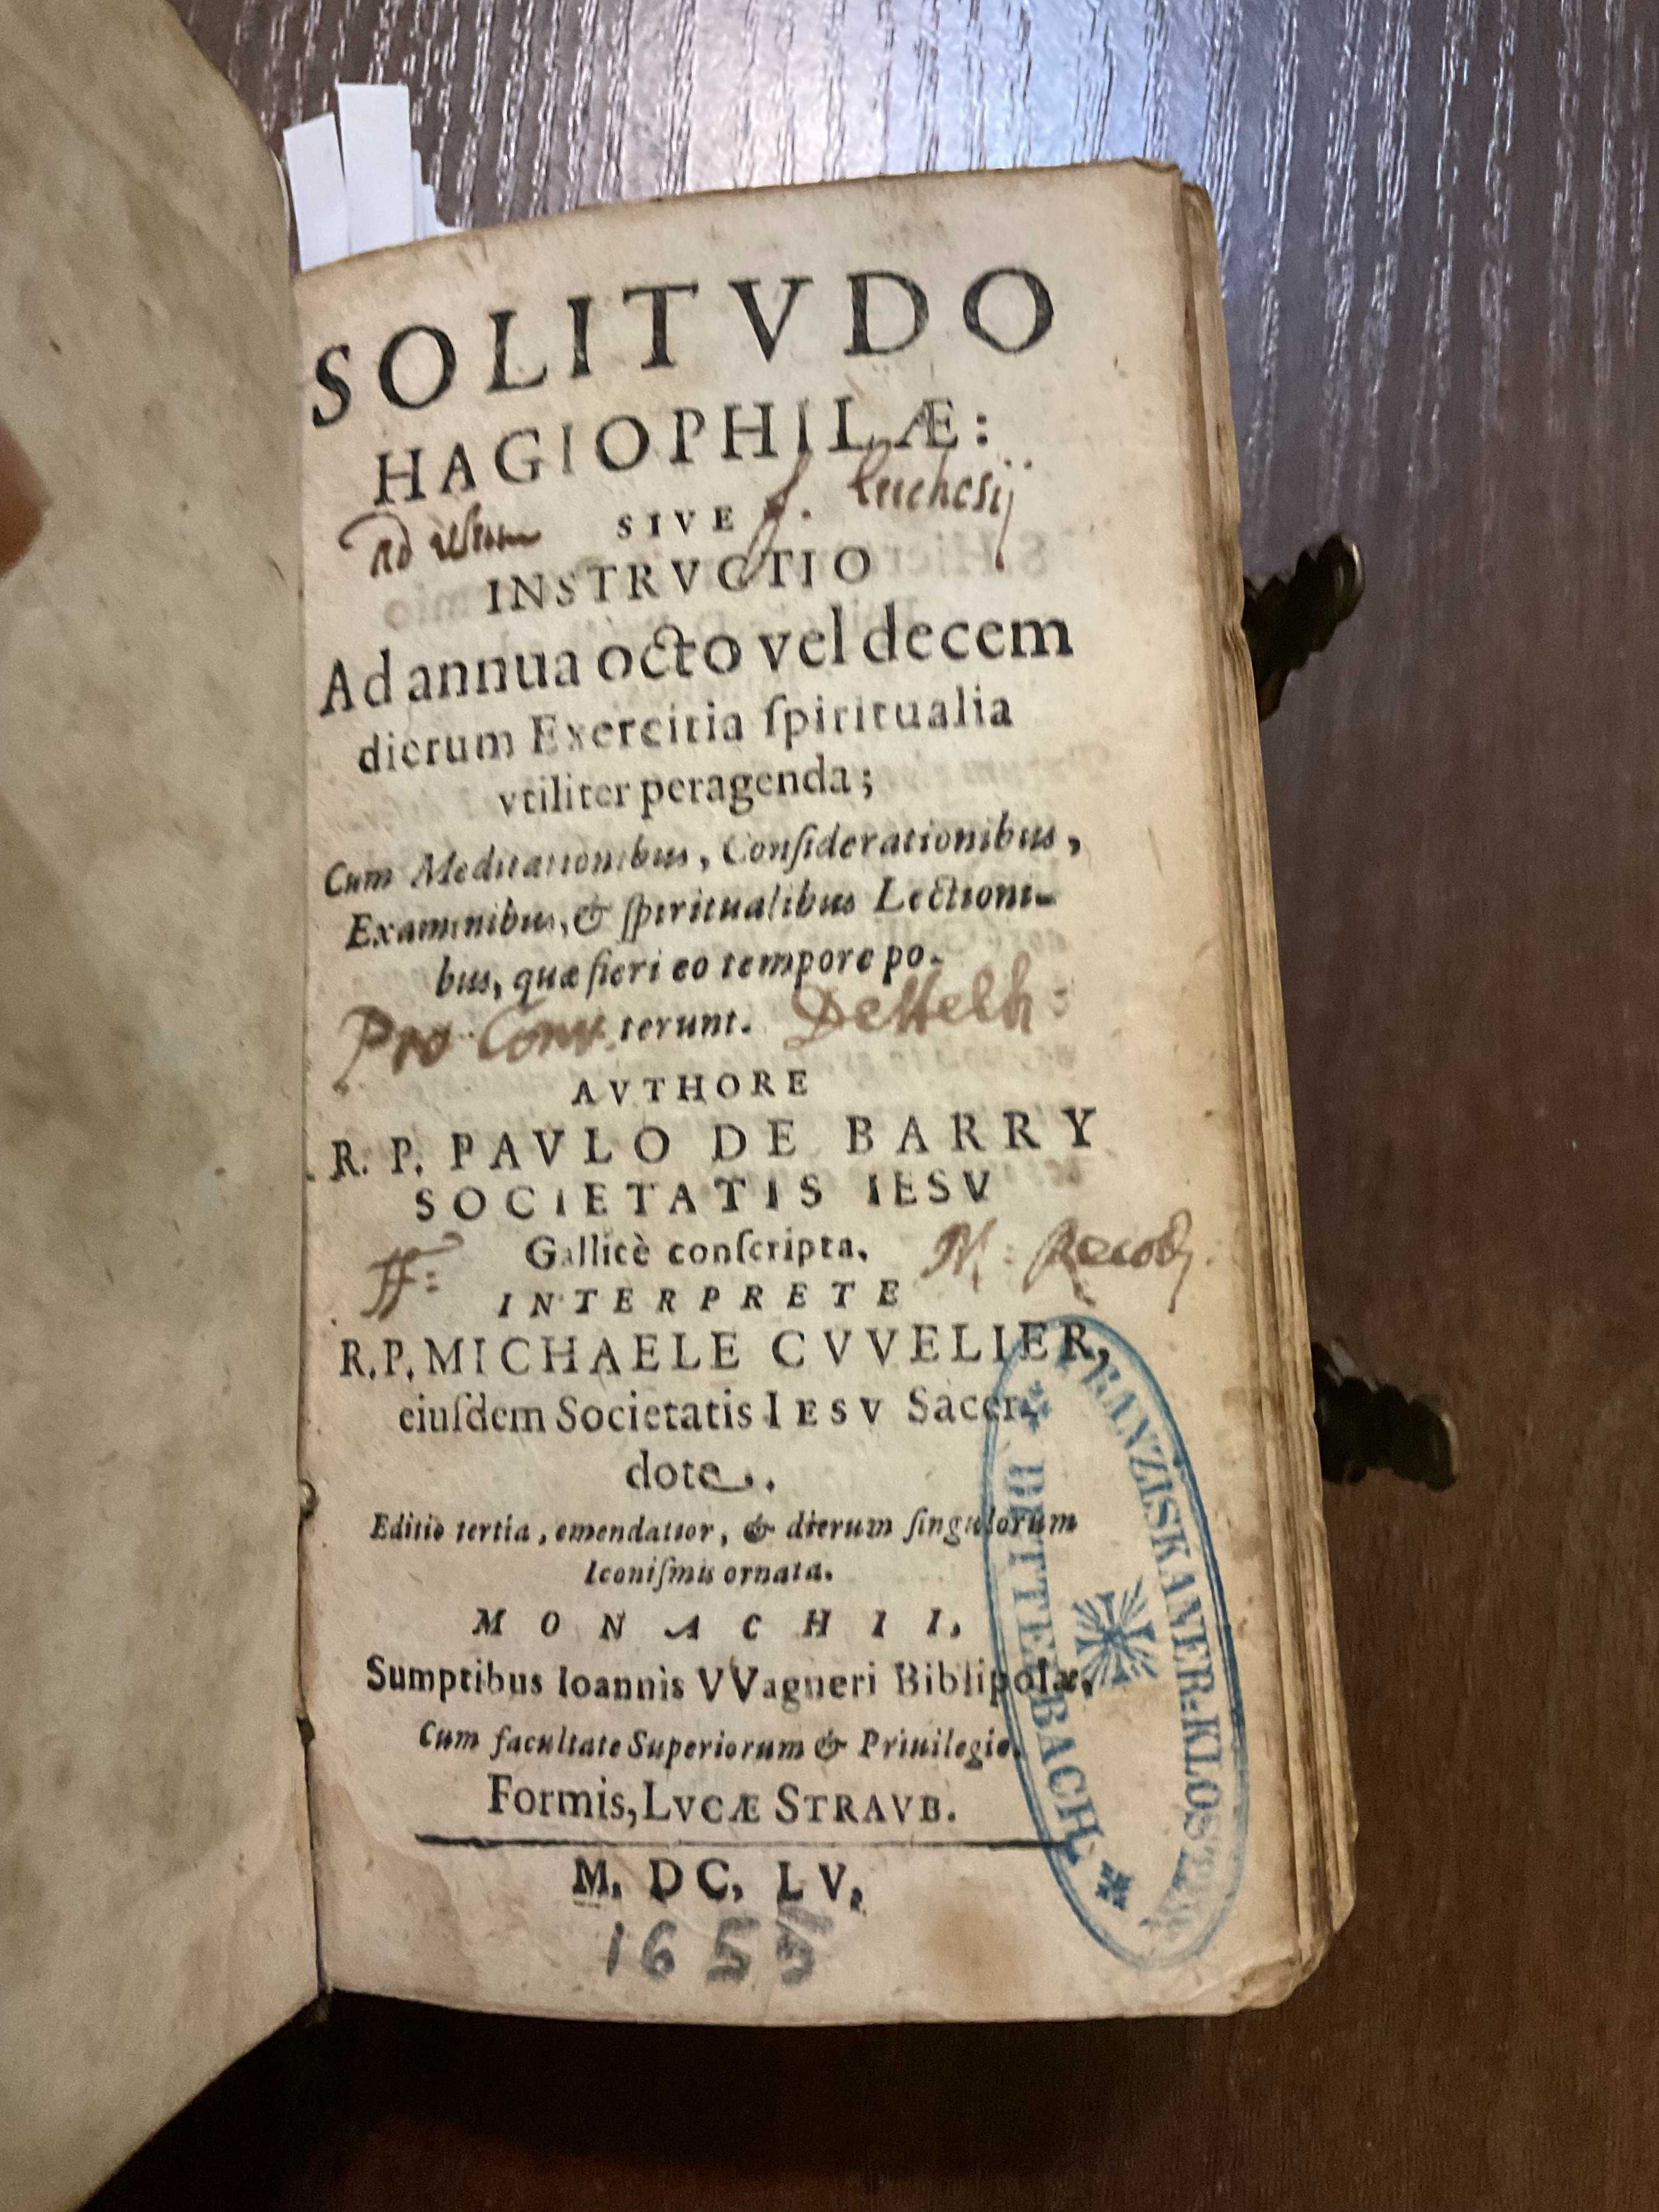 Мюнхен 1655 Solitudo Hagiophilae Стародрук (гравюри)